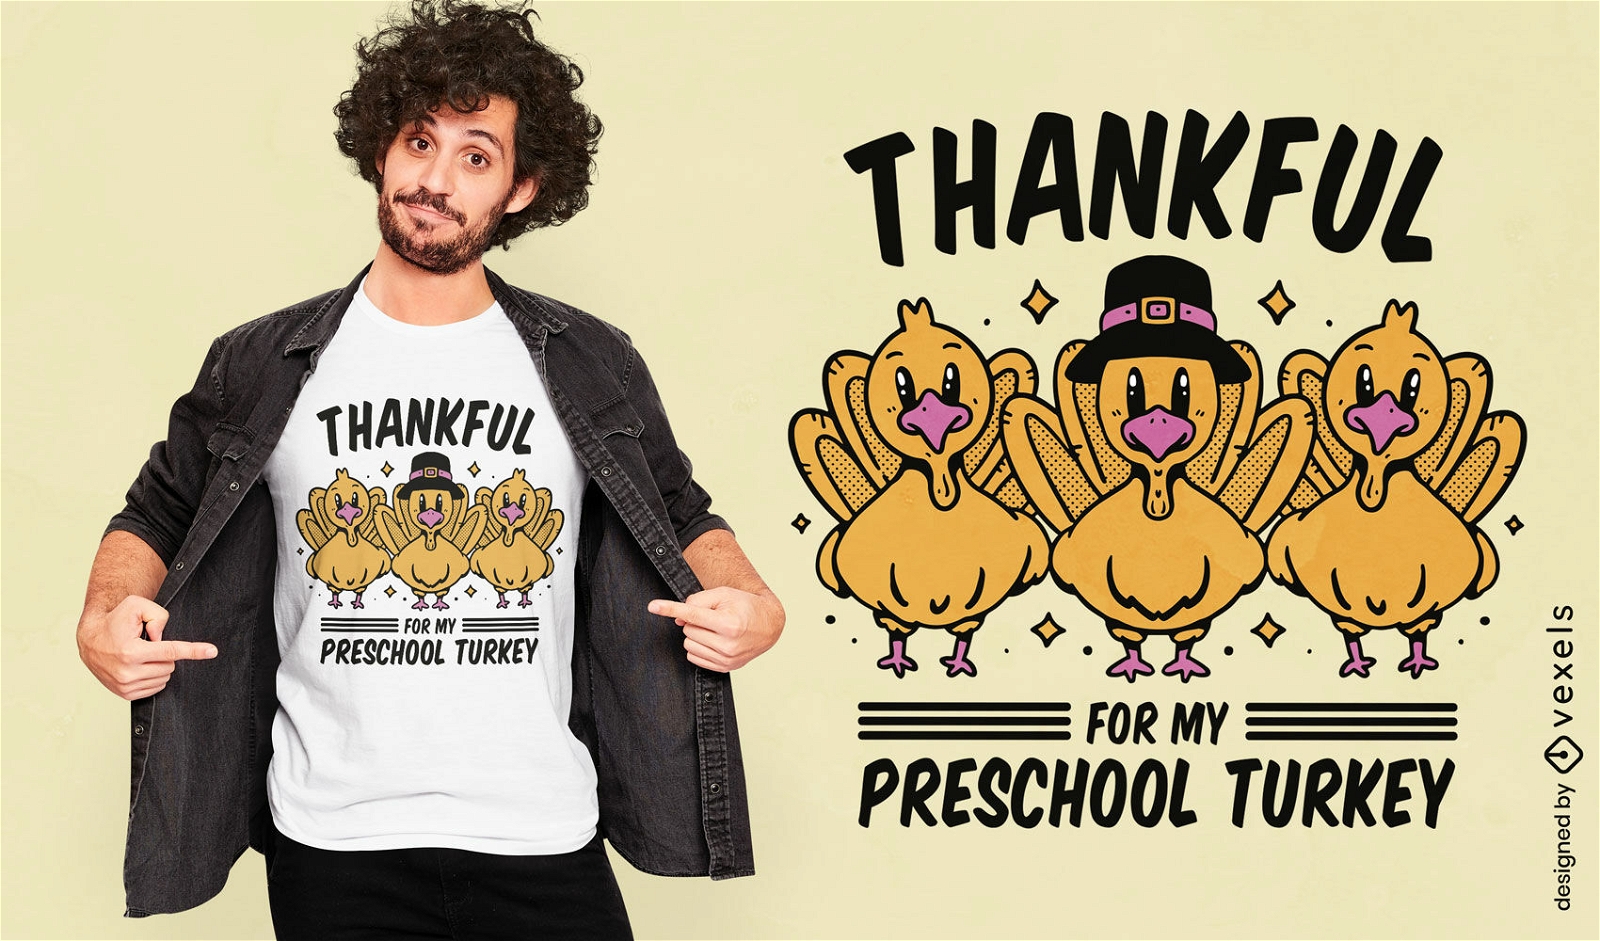 Preschool turkey t-shirt design